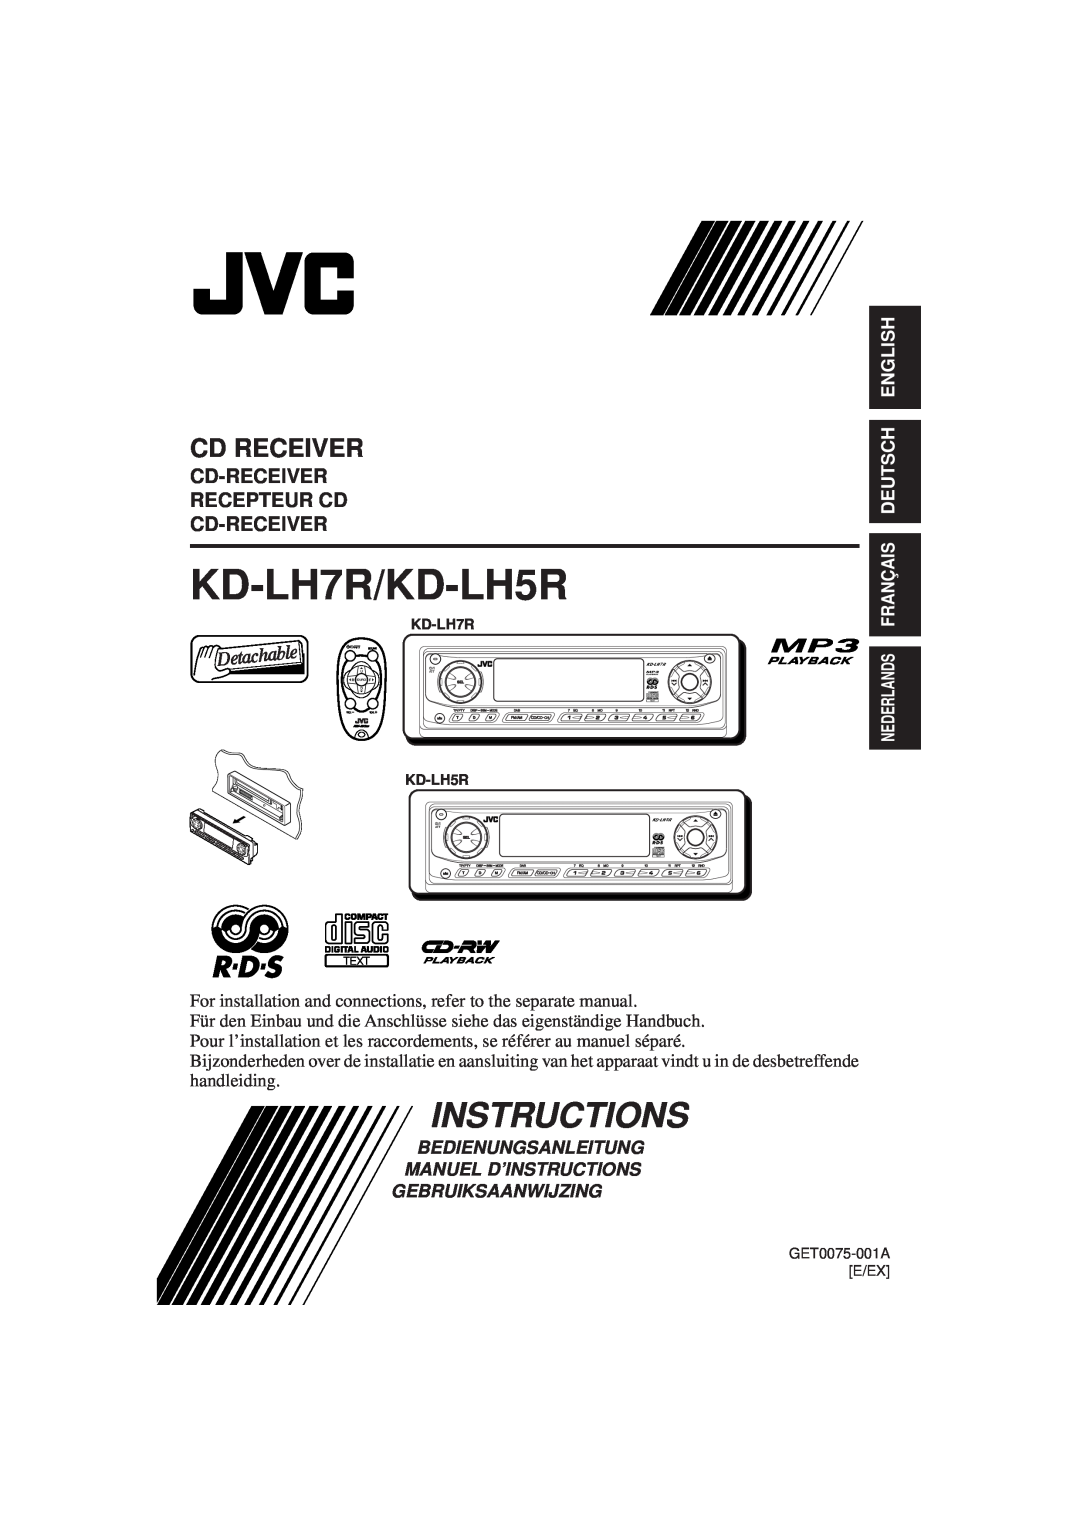 JVC manual Cd Receiver, Cd-Receiver Recepteur Cd Cd-Receiver, KD-LH7R/KD-LH5R, Instructions, Gebruiksaanwijzing 